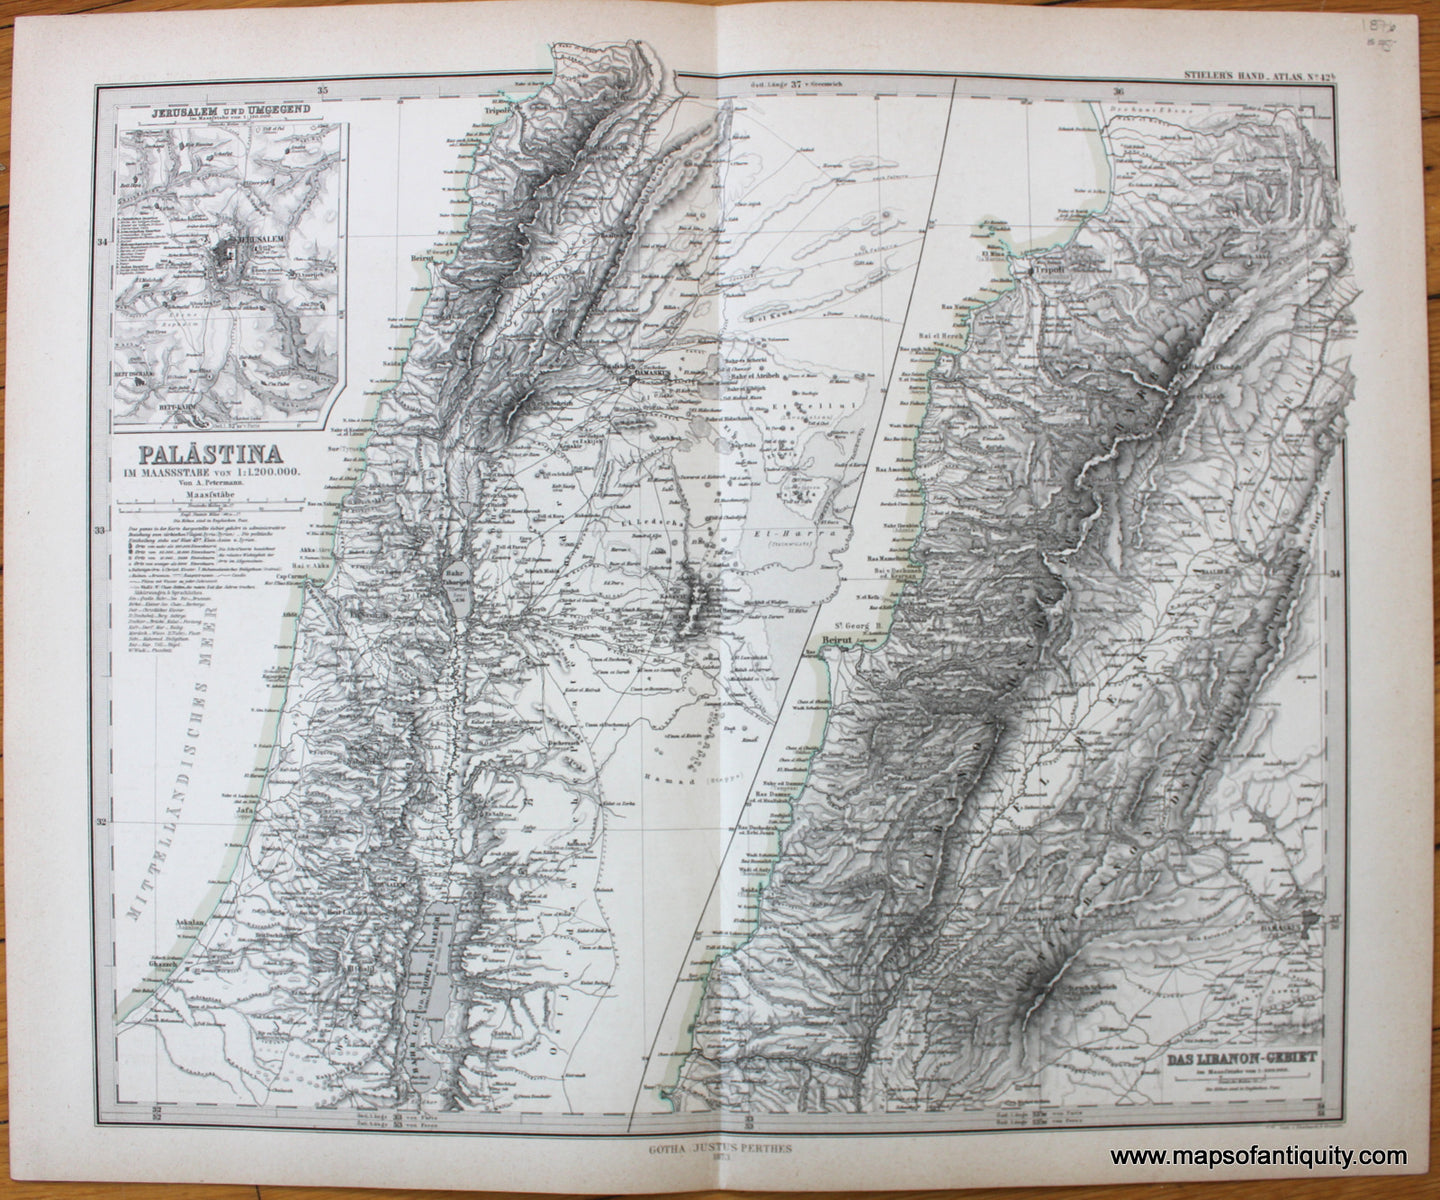 Antique-Map-Palastina-Libanon-Palestine-Lebanon-Stieler-1876-1870s-1800s-19th-century-Maps-of-Antiquity